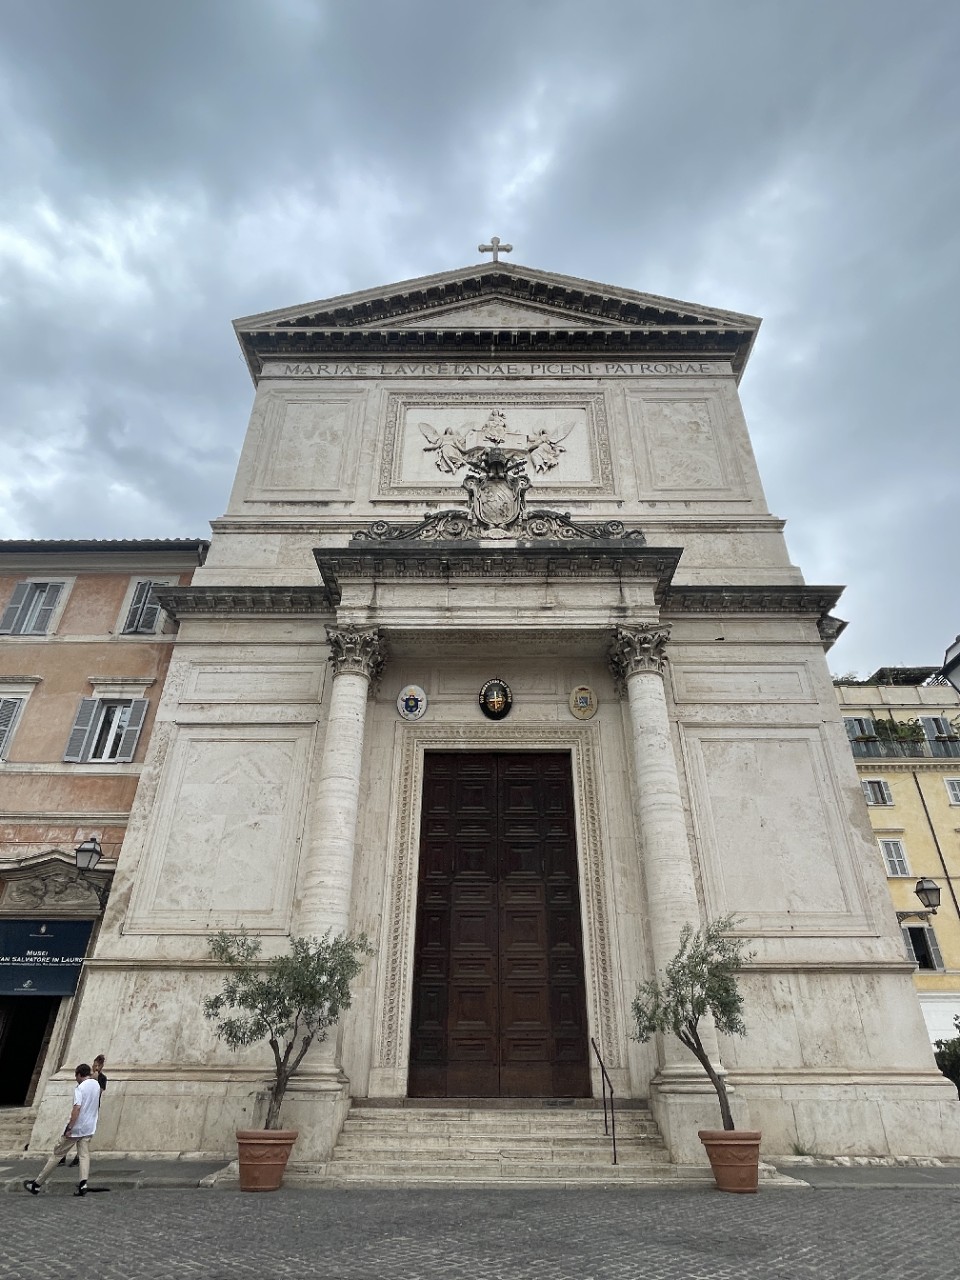 Church of San Salvatore in Lauro